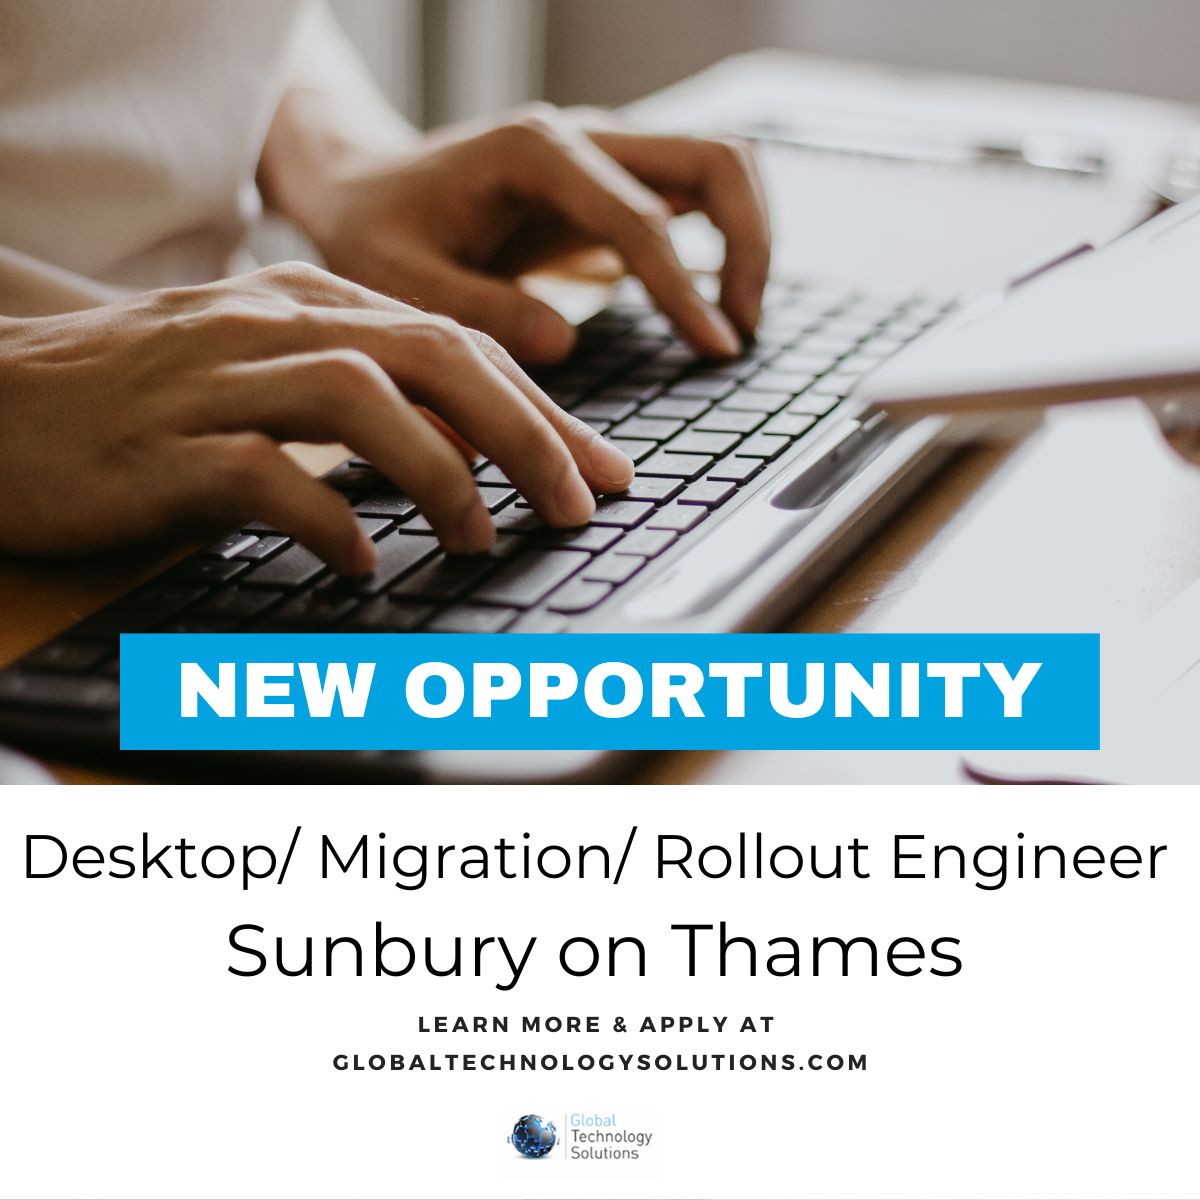 Jobs in sunbury on thames, Migration Engineer on laptop.